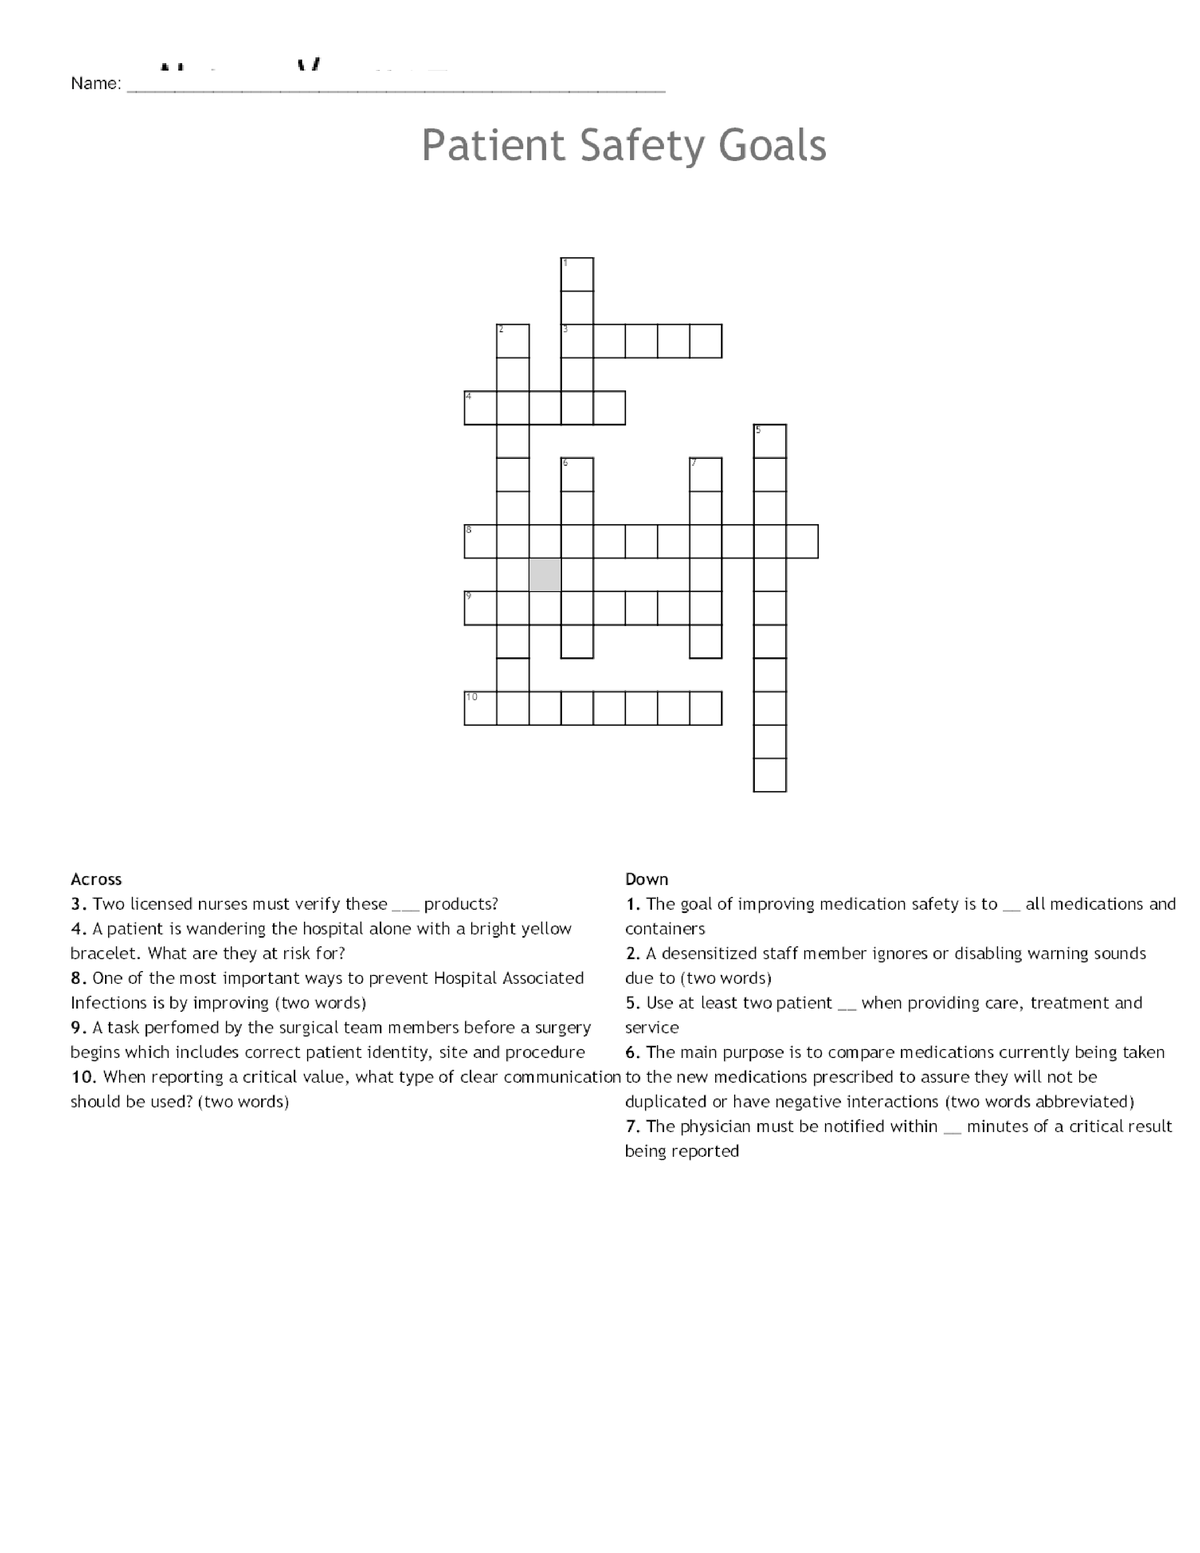 Patient Safety Goals Crossword Puzzle NUR 201 Studocu